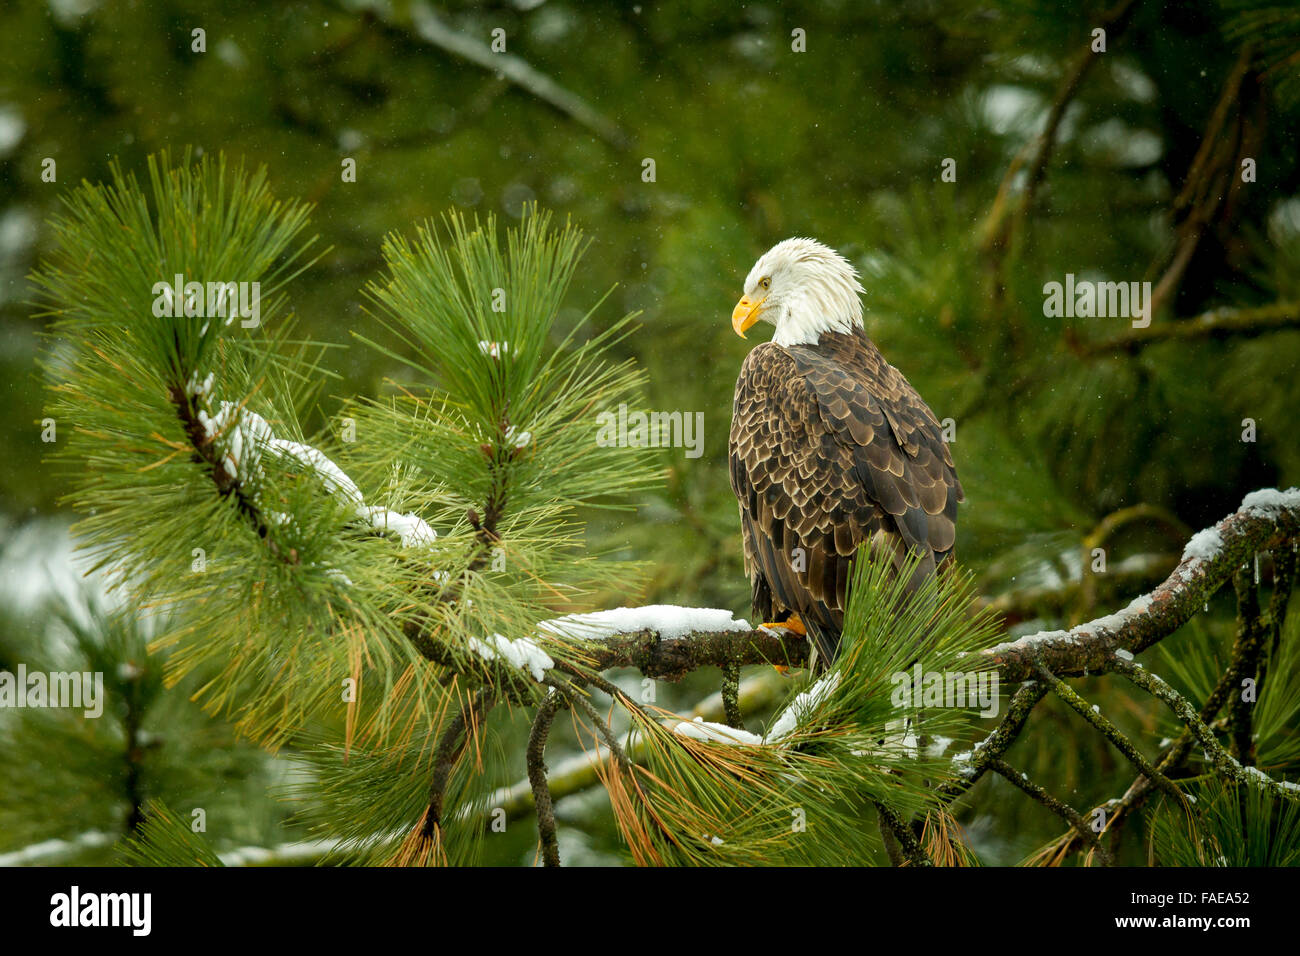 Majestic eagle in tree. Stock Photo